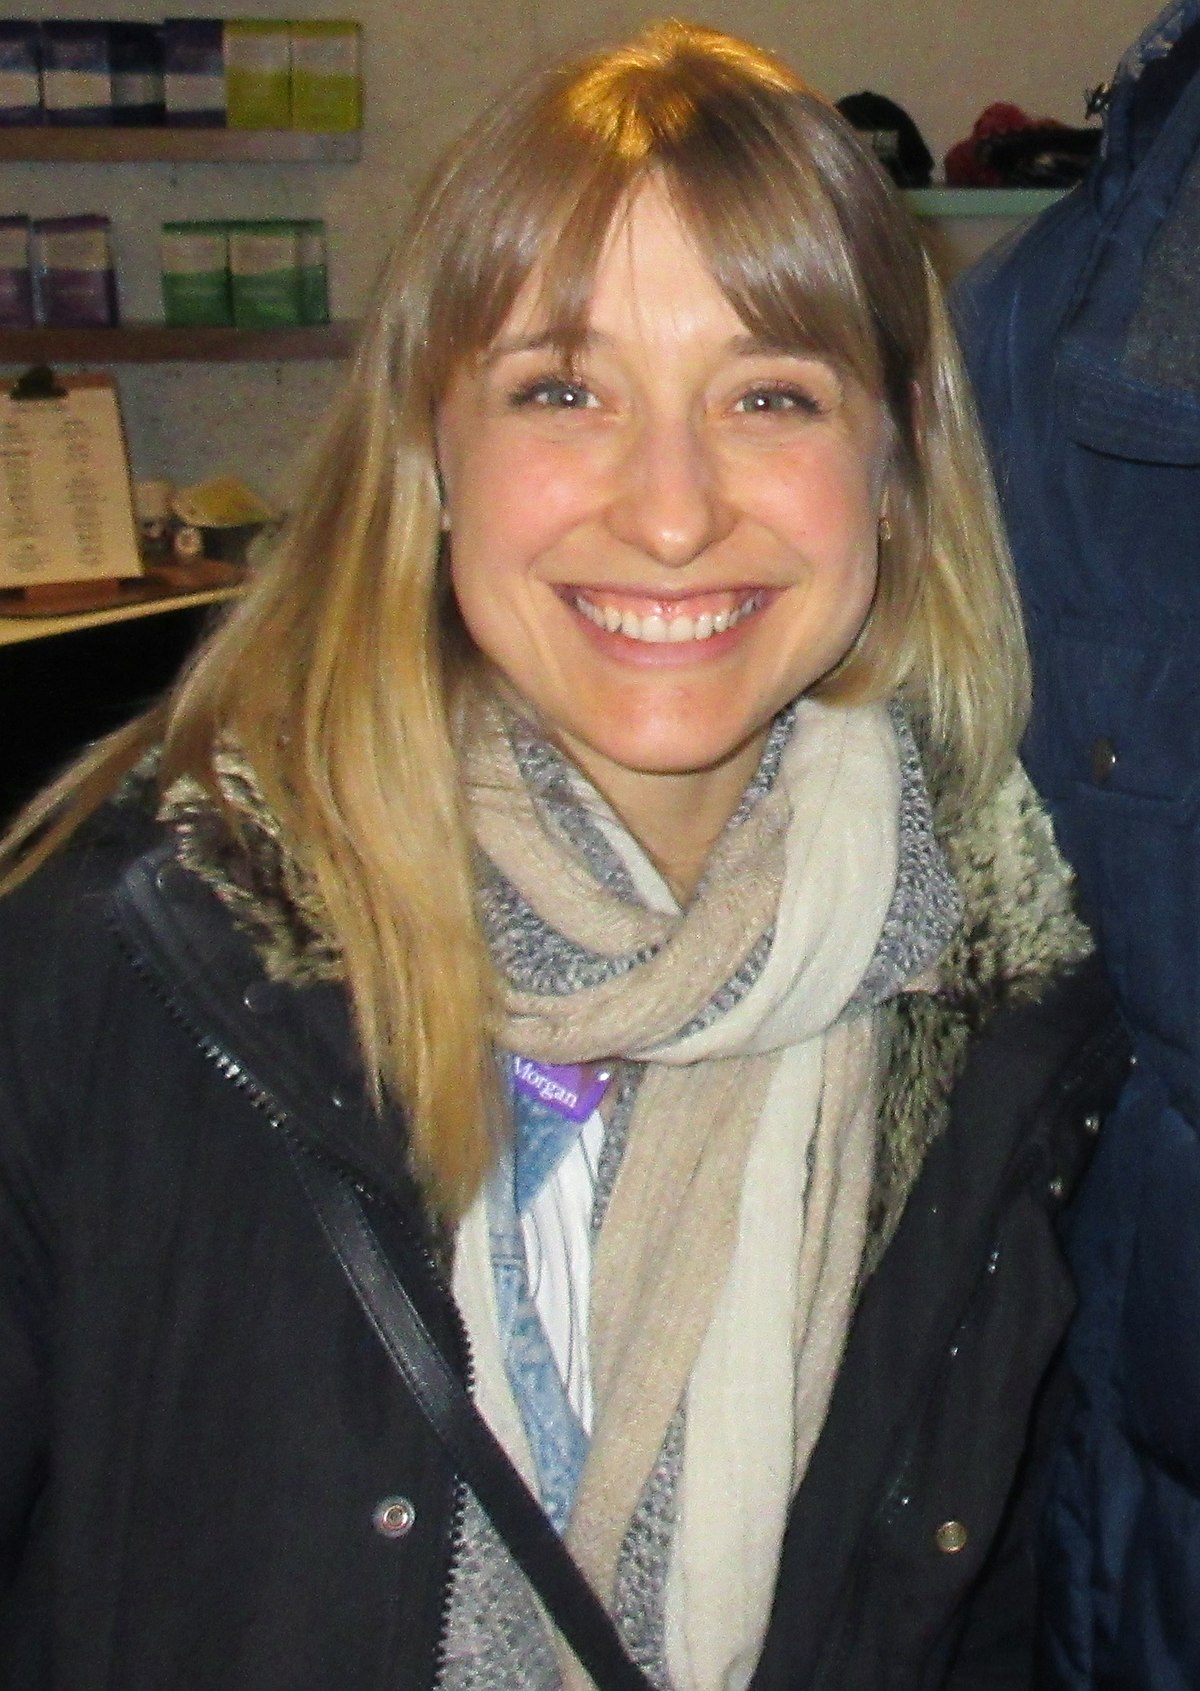 Allison Mack - Wikipedia image